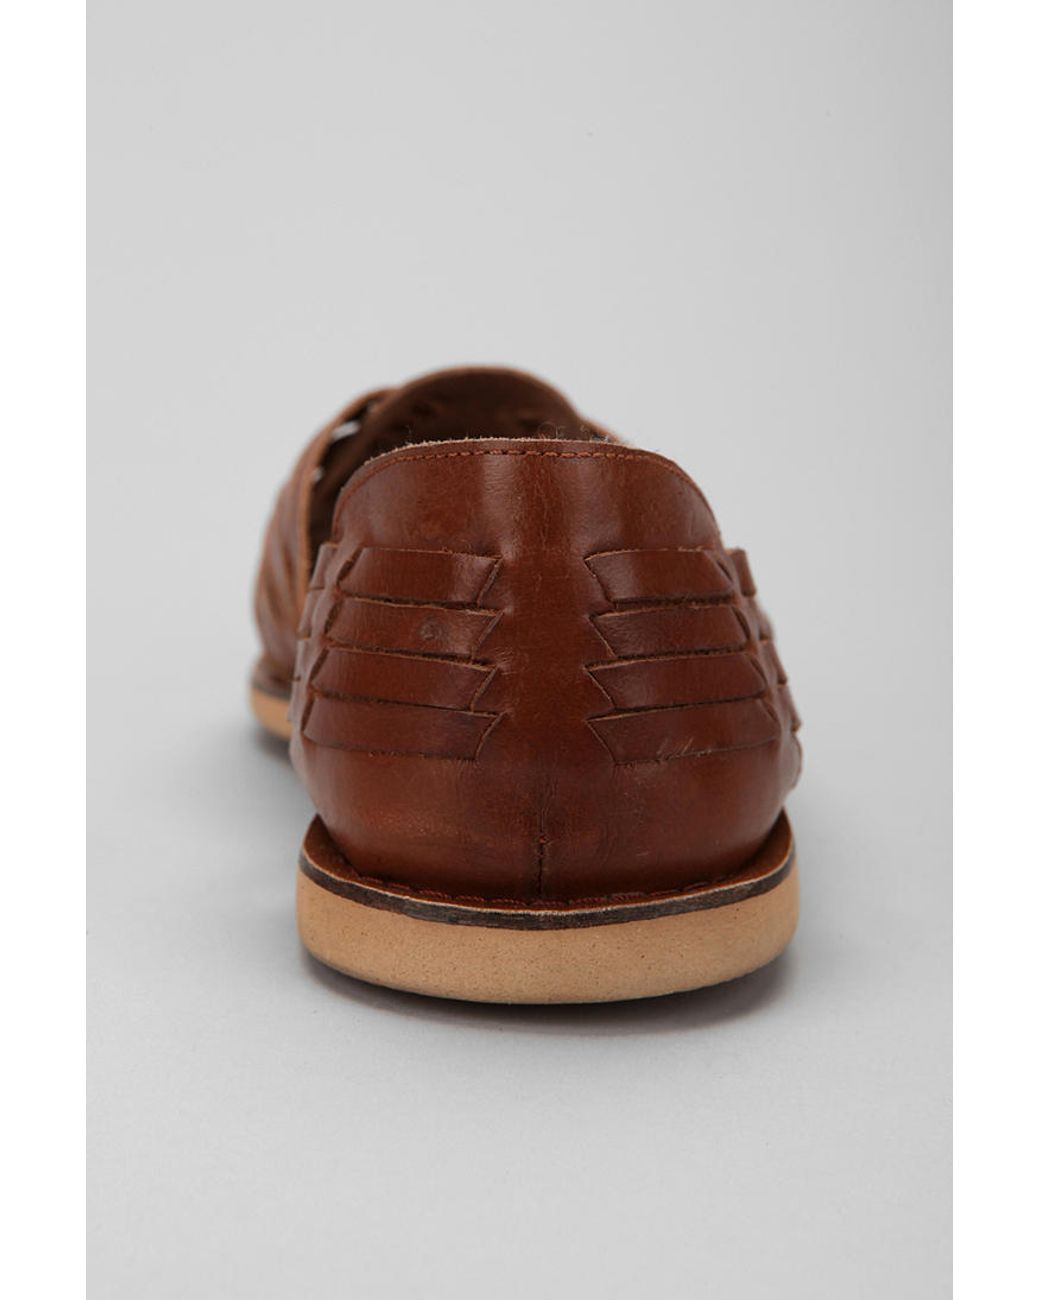 Roan Clarise II Woven Leather Huarache Sandals | Dillard's